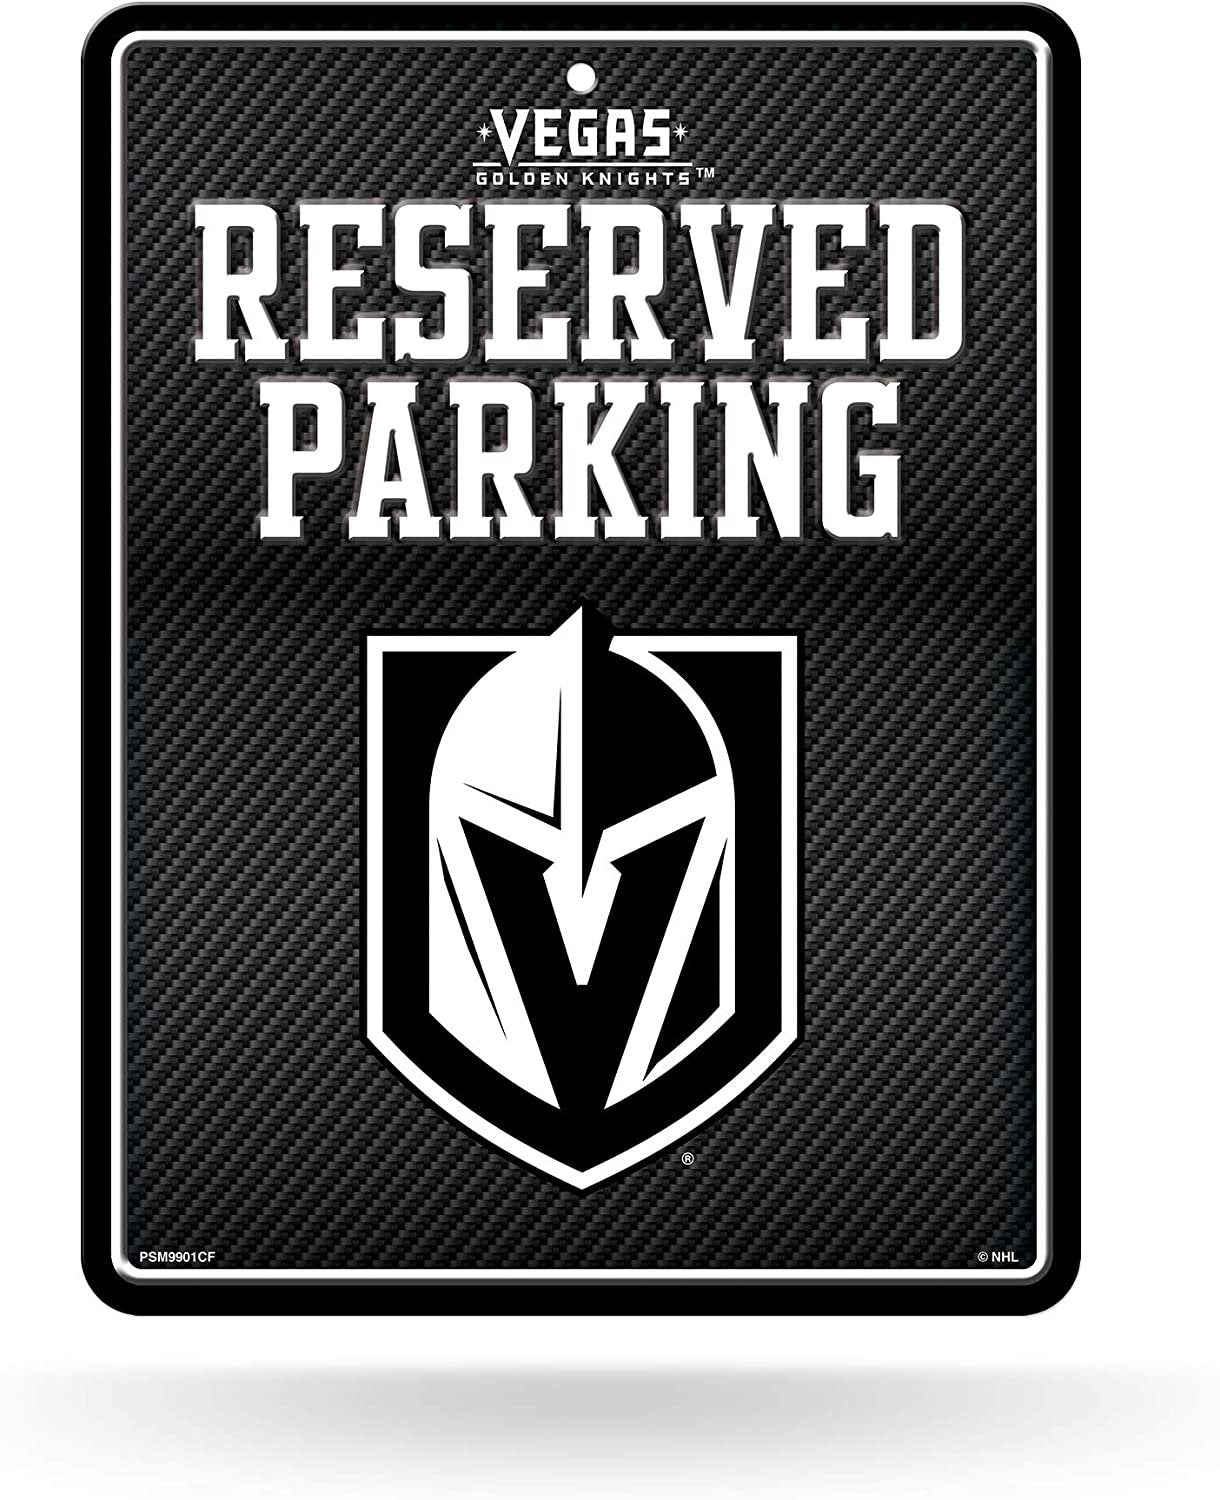 Vegas Golden Knights Metal Parking Sign, Carbon Fiber Design 8.5x11 Inch